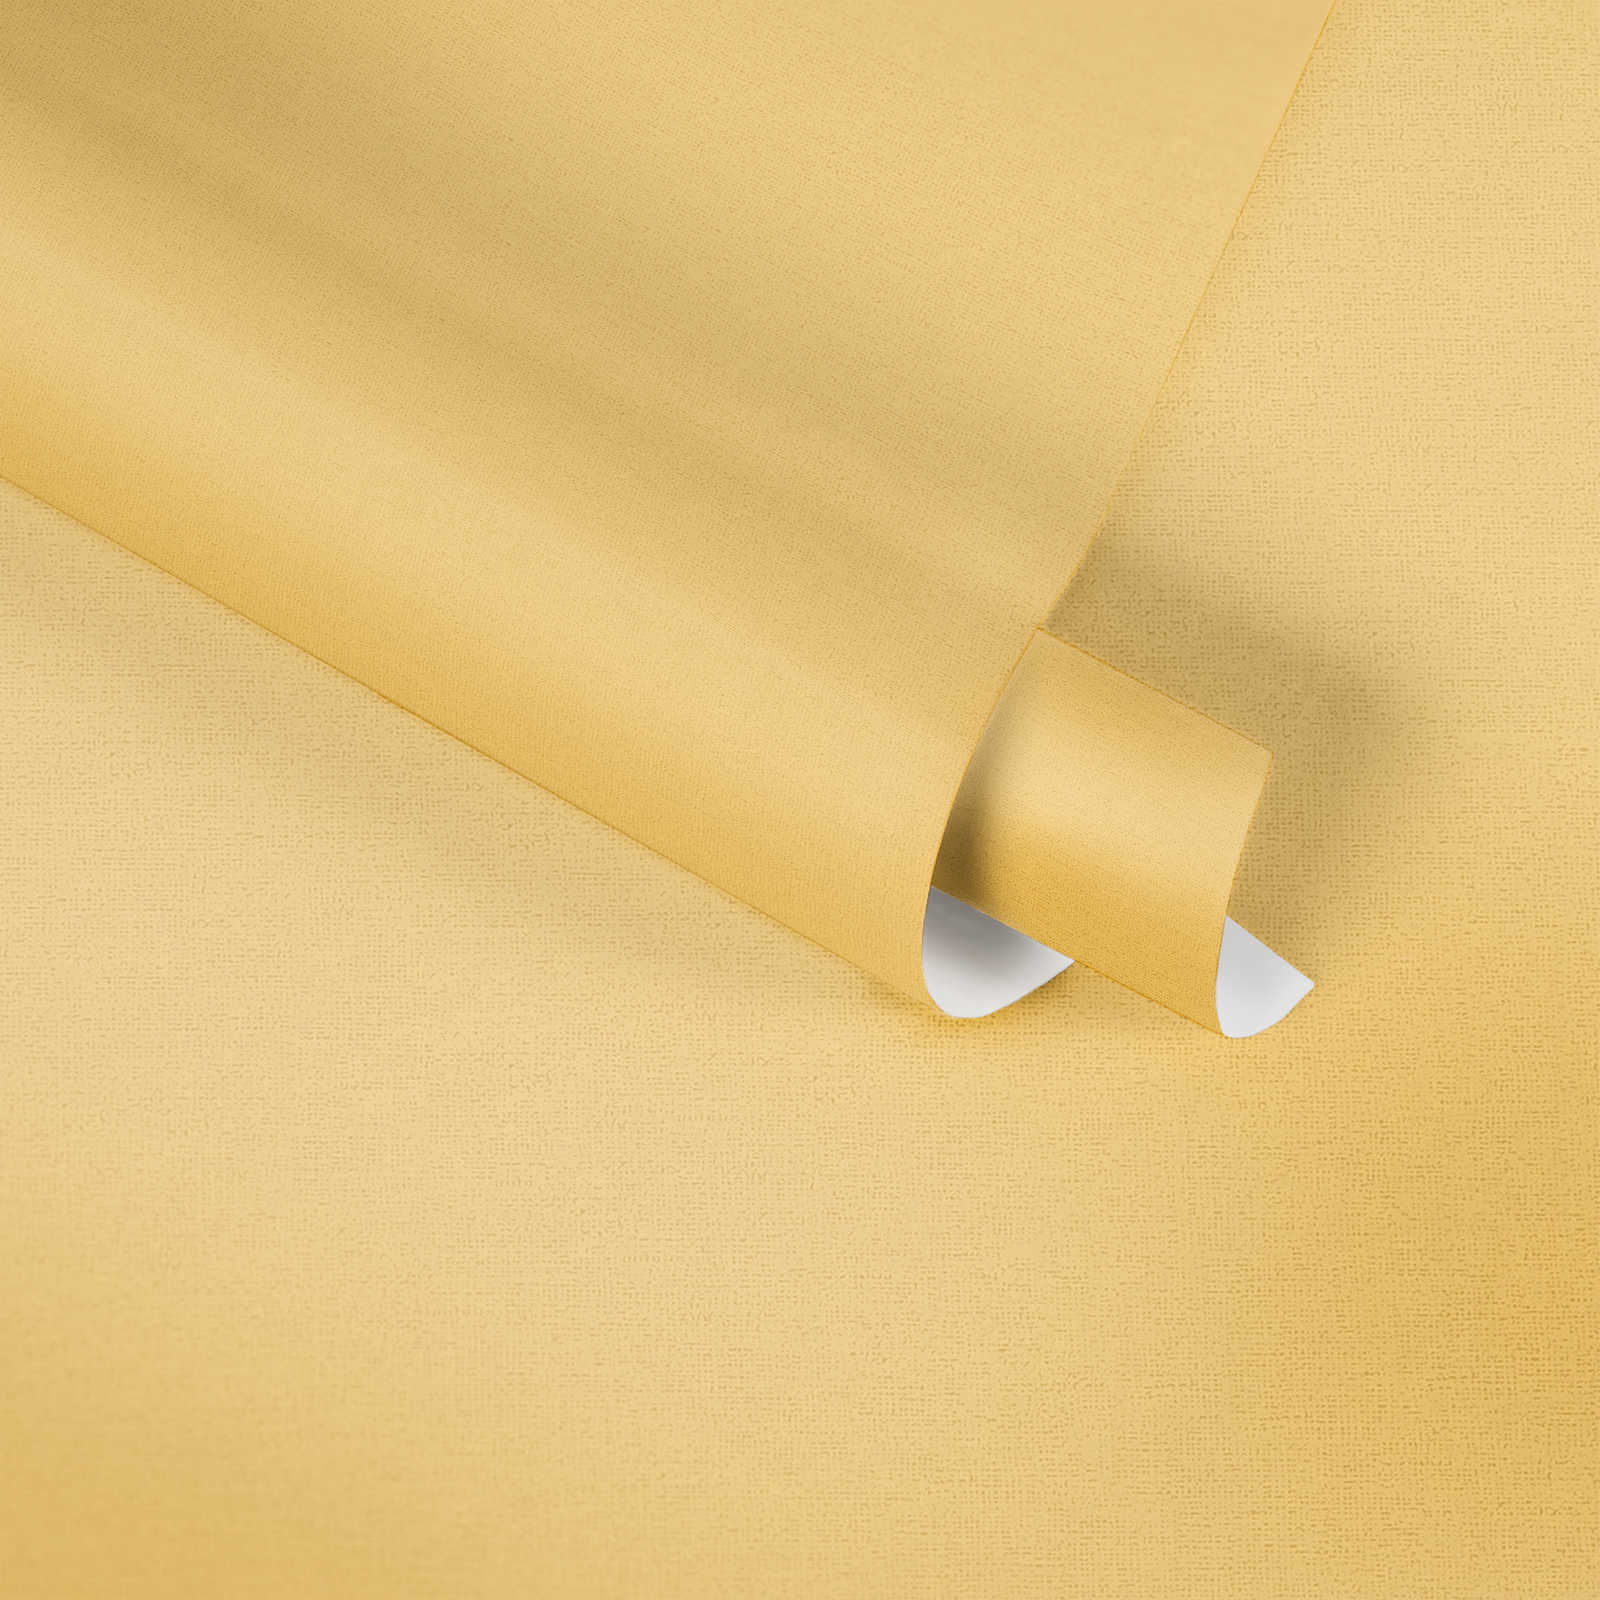             Yellow wallpaper from MICHALSKY monochrome & matte
        